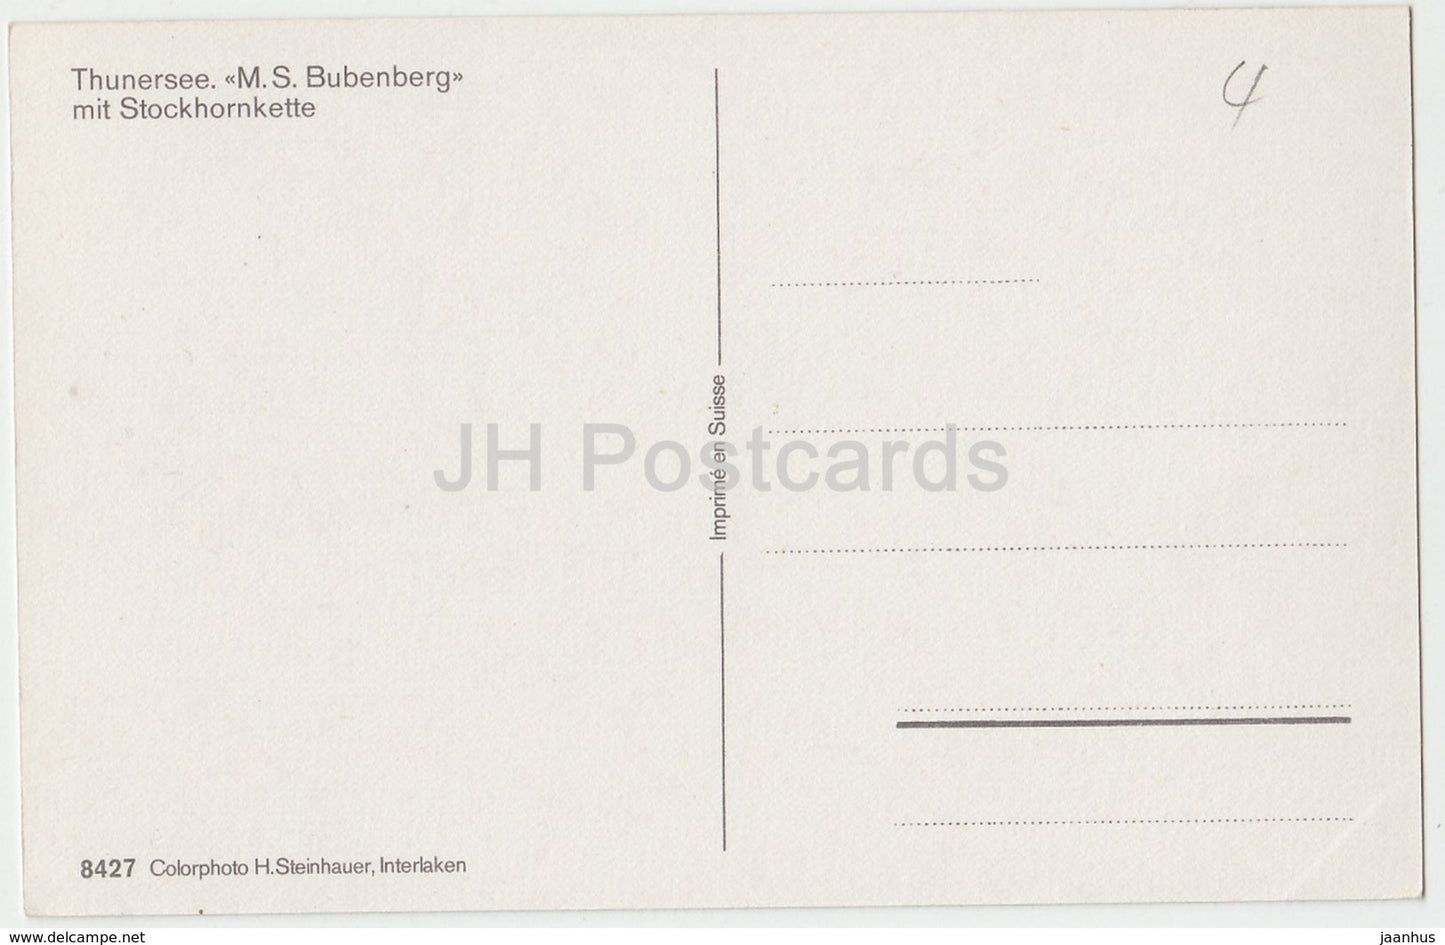 Thunersee - M. S. Bubenberg mit Stockhornkette - ship - 8427 - Switzerland - unused